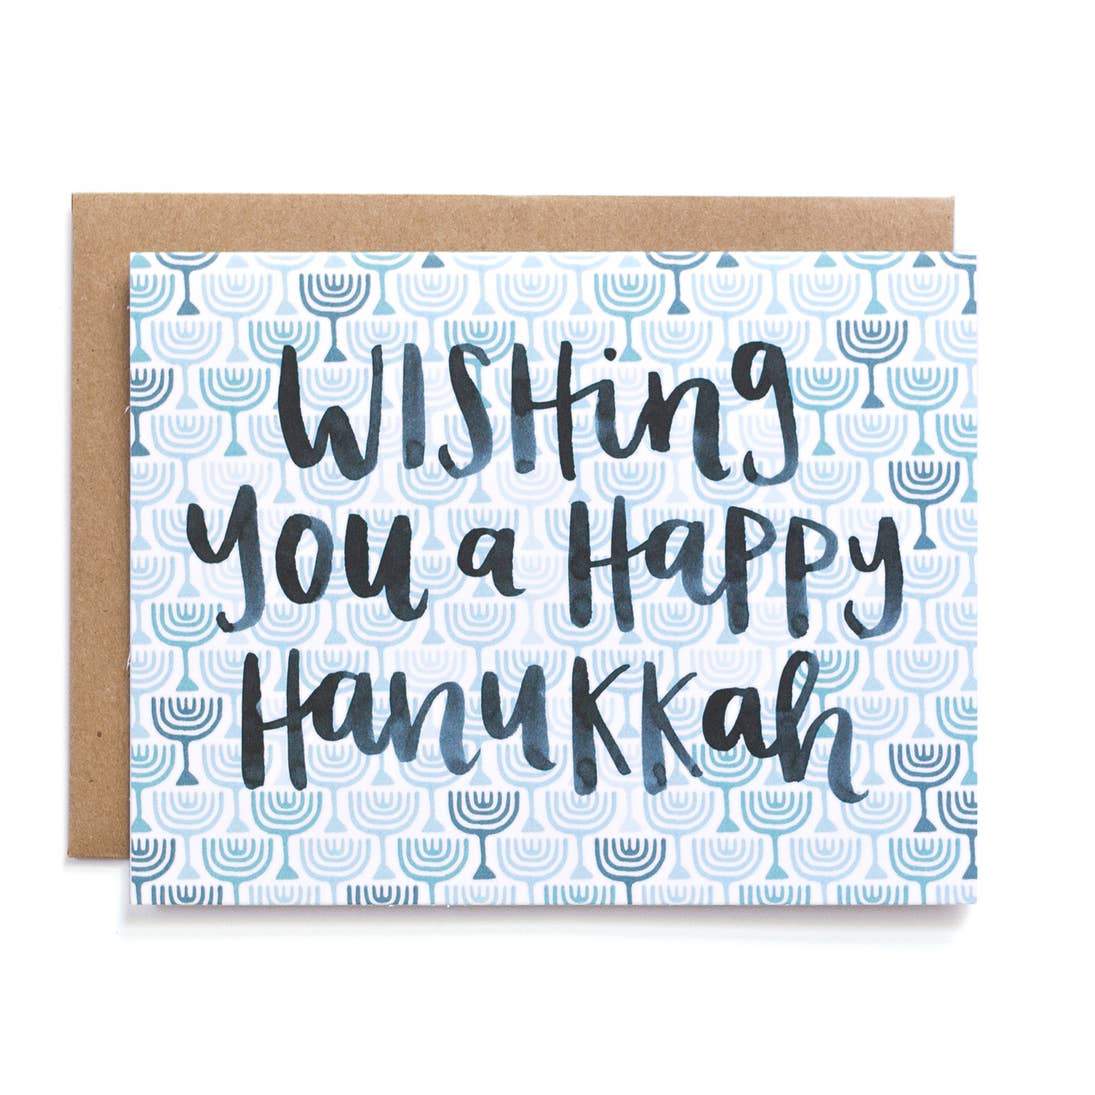 Hanukkah Wishes Boxed Set of 8